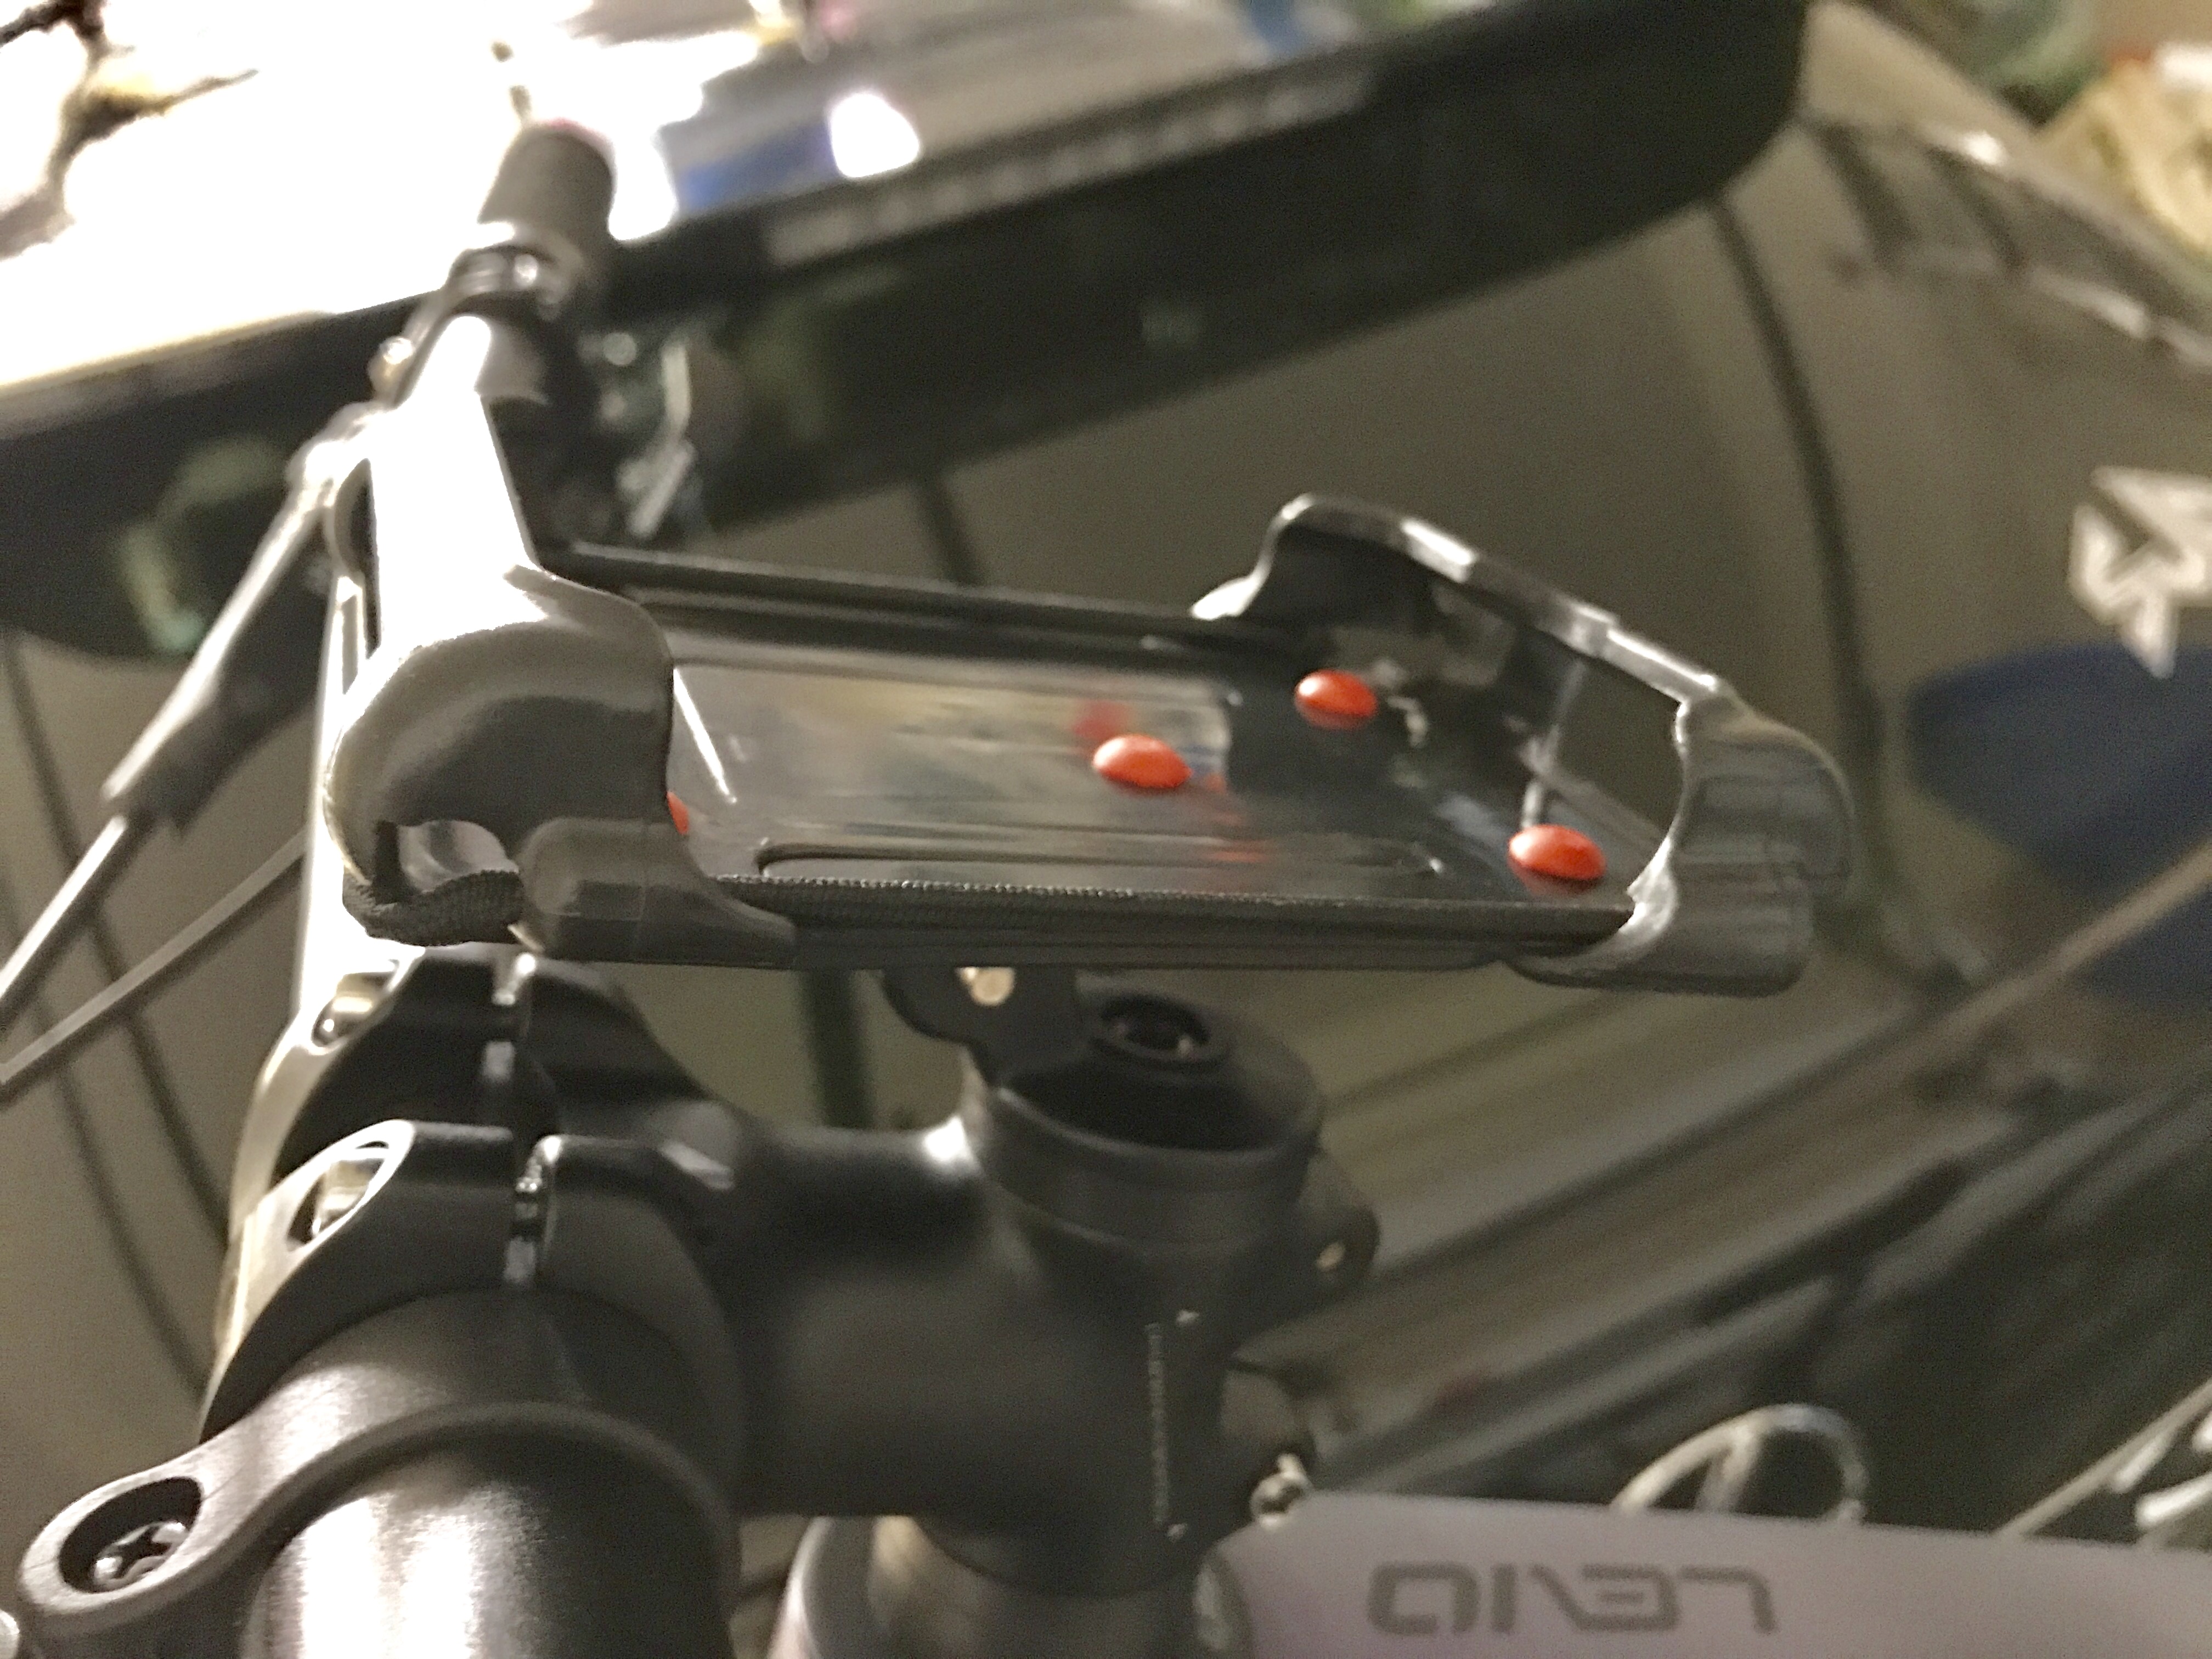 specialized bike phone mount